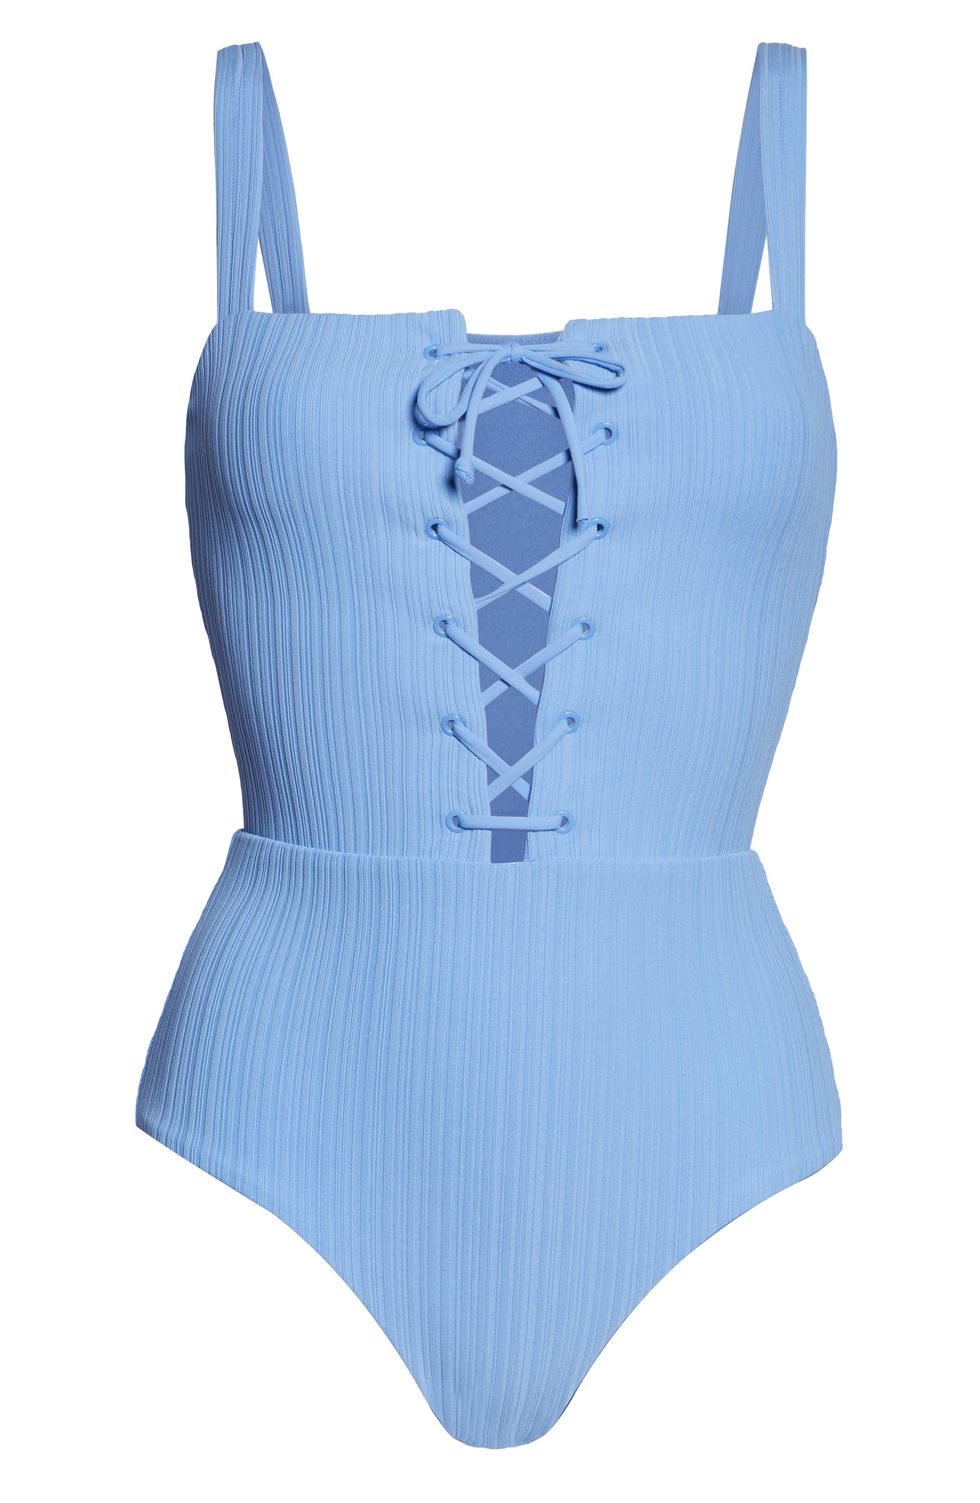 Kylie Jenner's Onia Bandana-Print Bikini Is Still Available to Shop